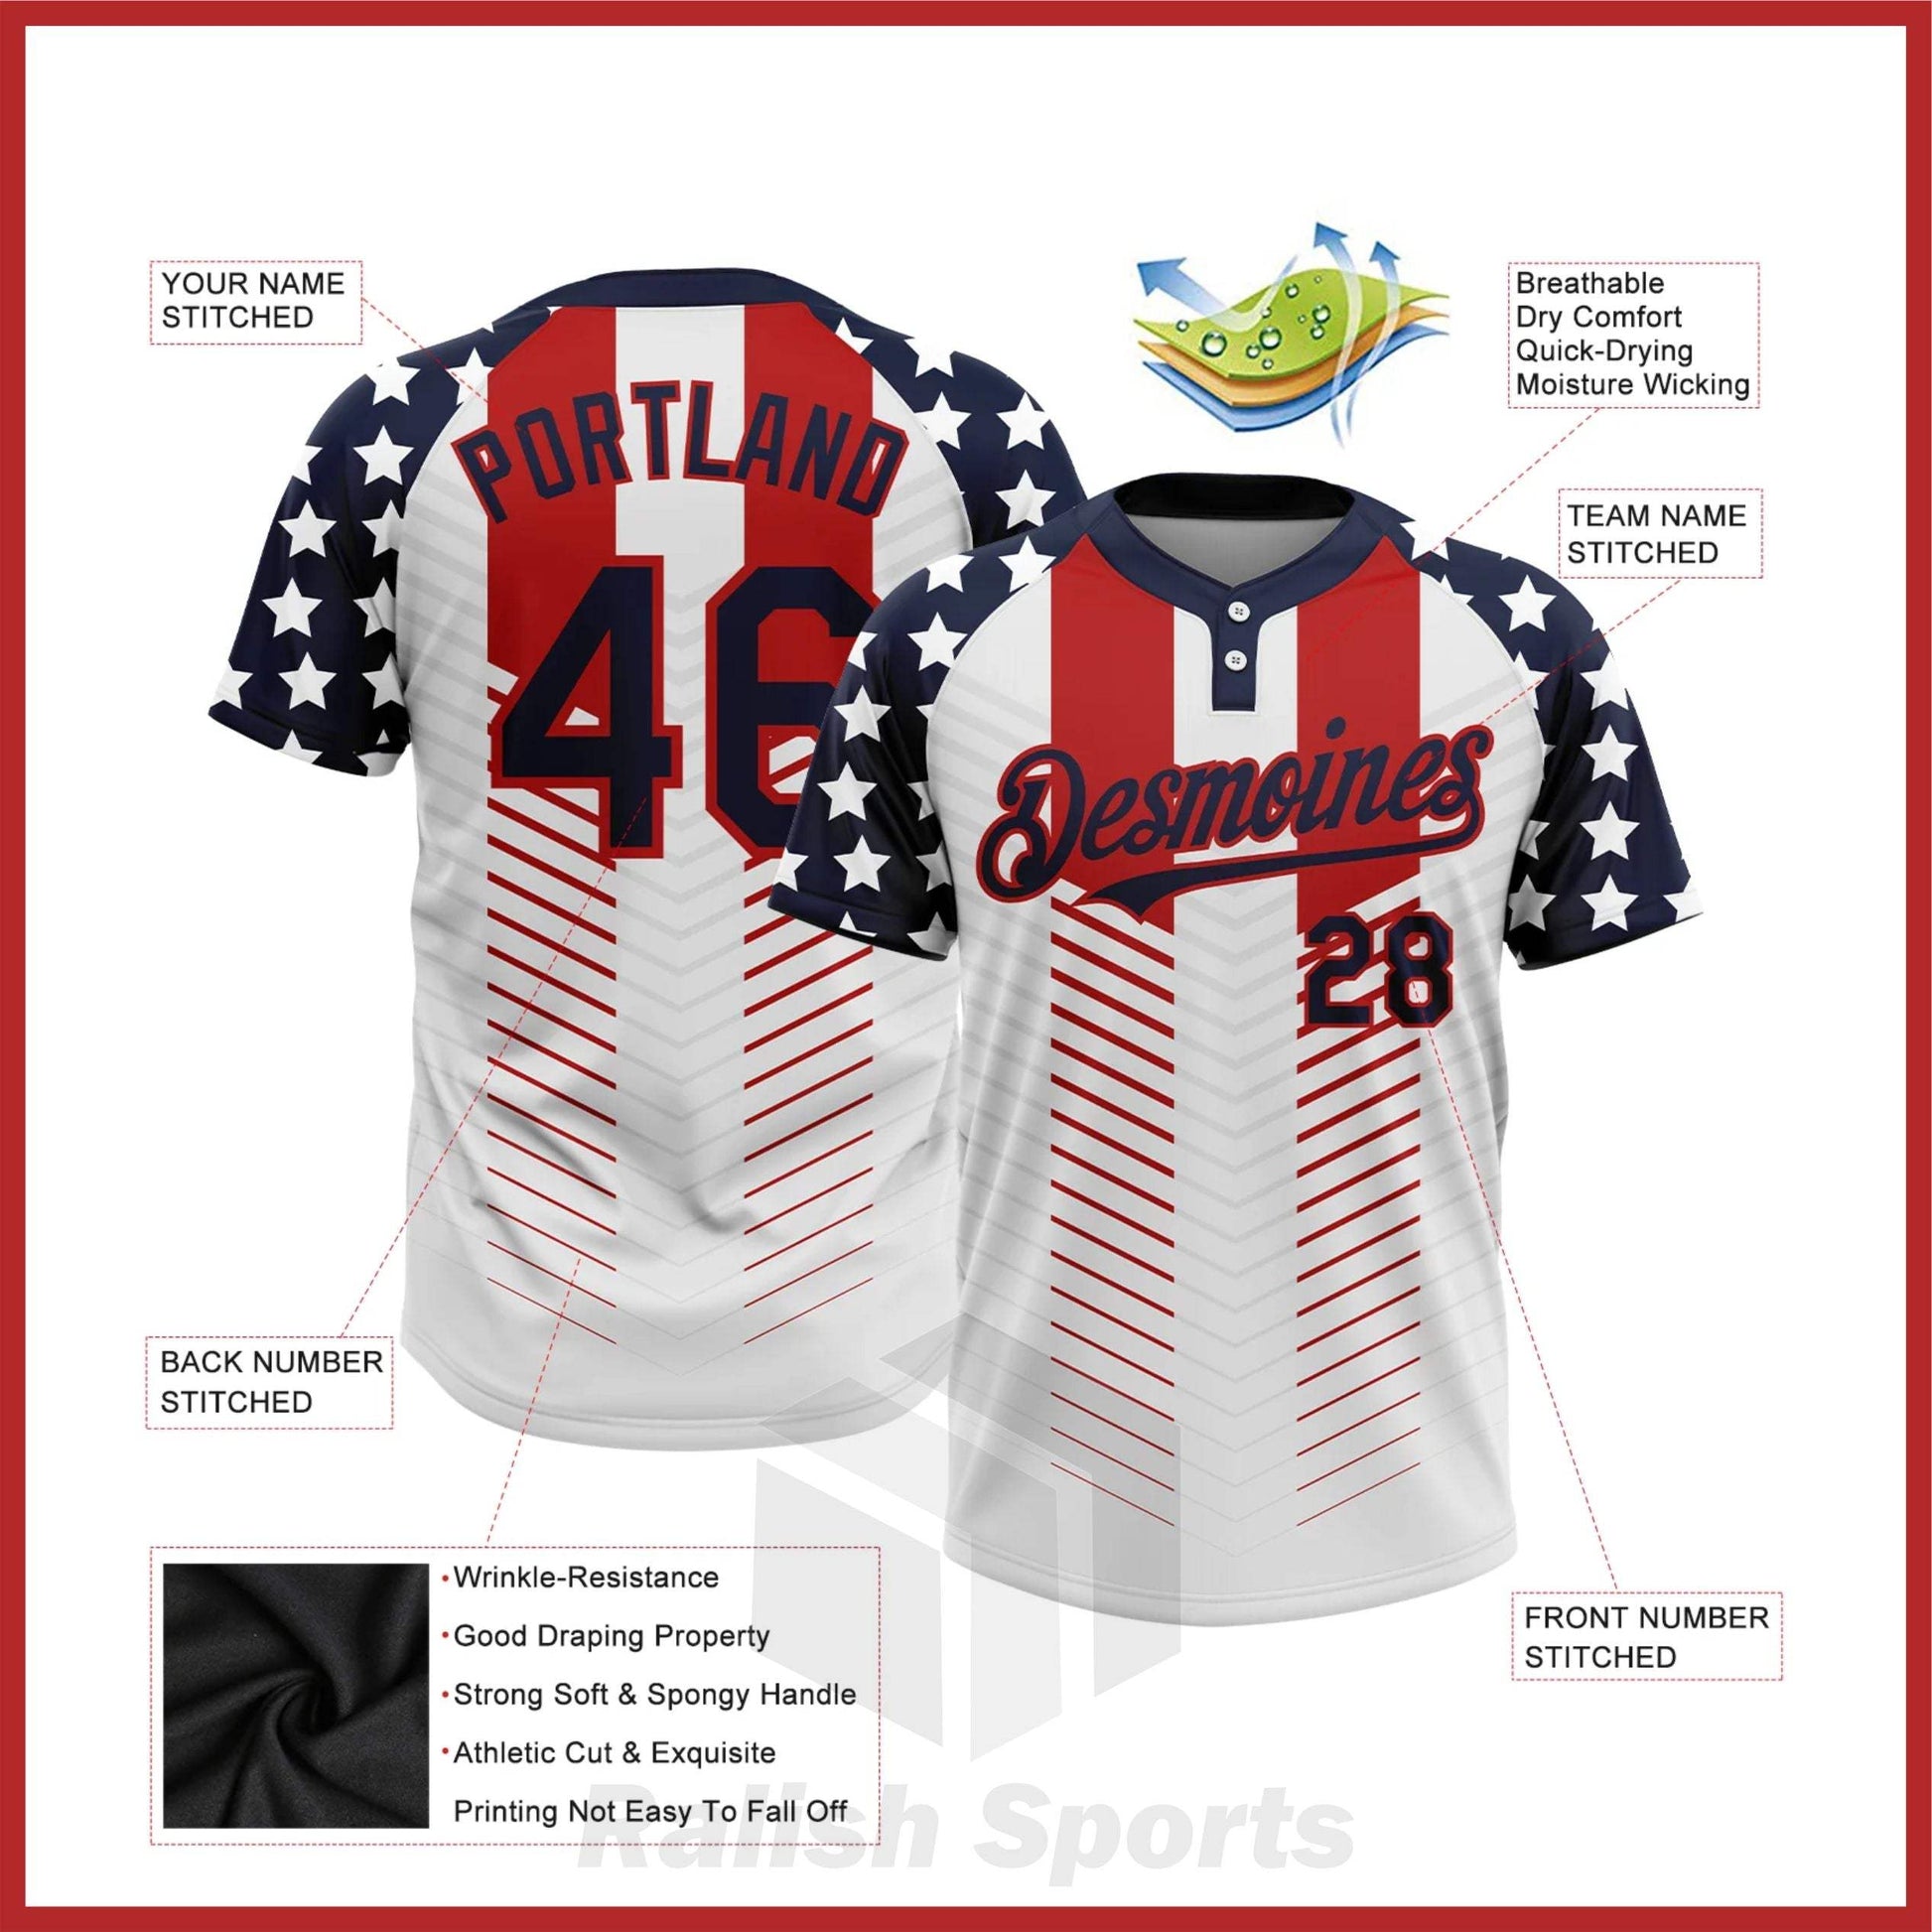 Custom White Royal-Red 3D American Flag Fashion Two-Button Unisex Softball Jersey - Ralish Sports